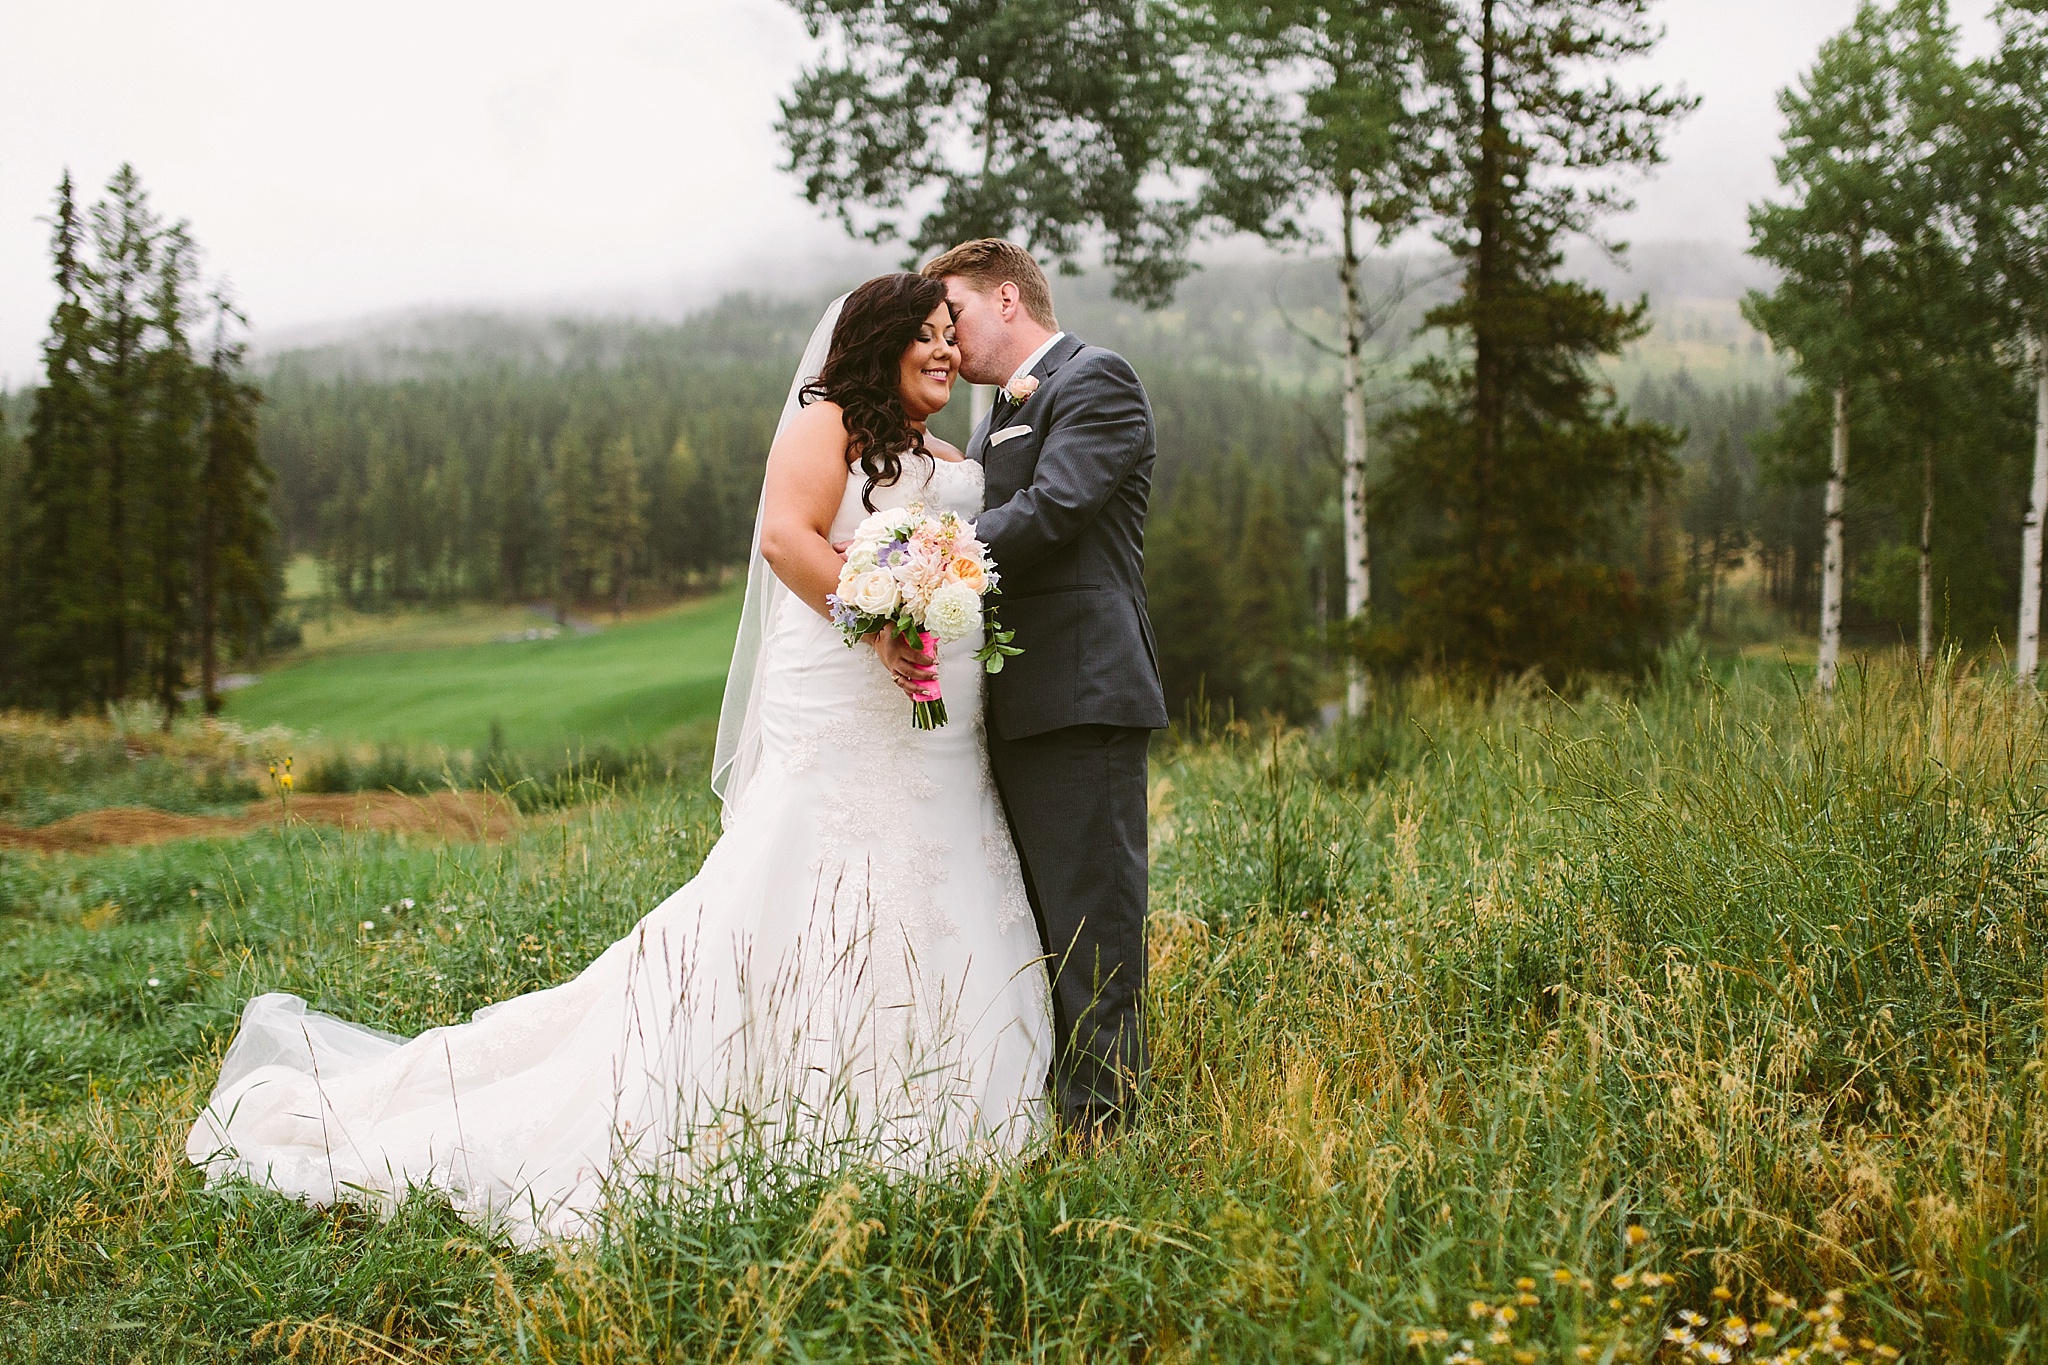 Silvertip Resort Canmore Alberta Wedding Photos Couple Kissing